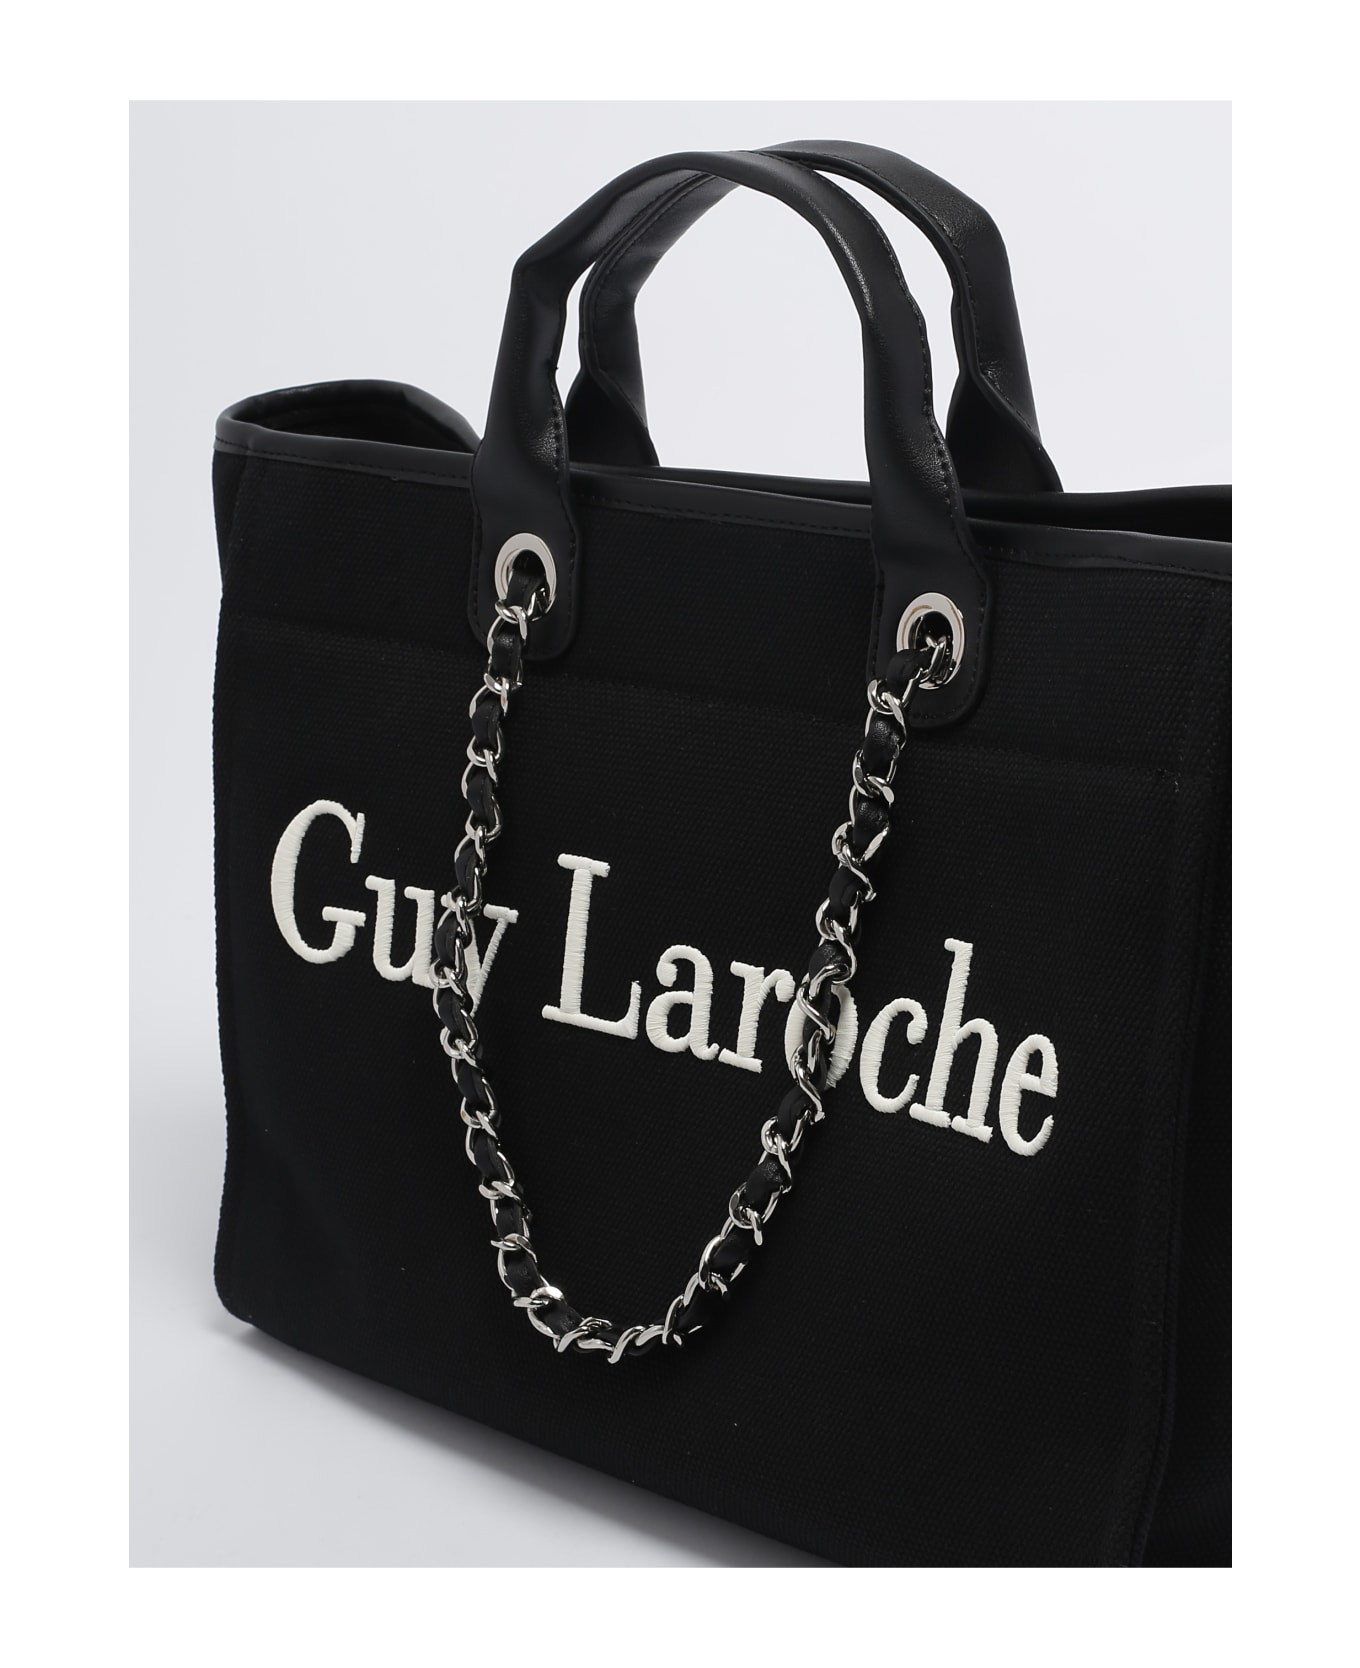 Guy Laroche Corinne Large Shopping Bag - NERO